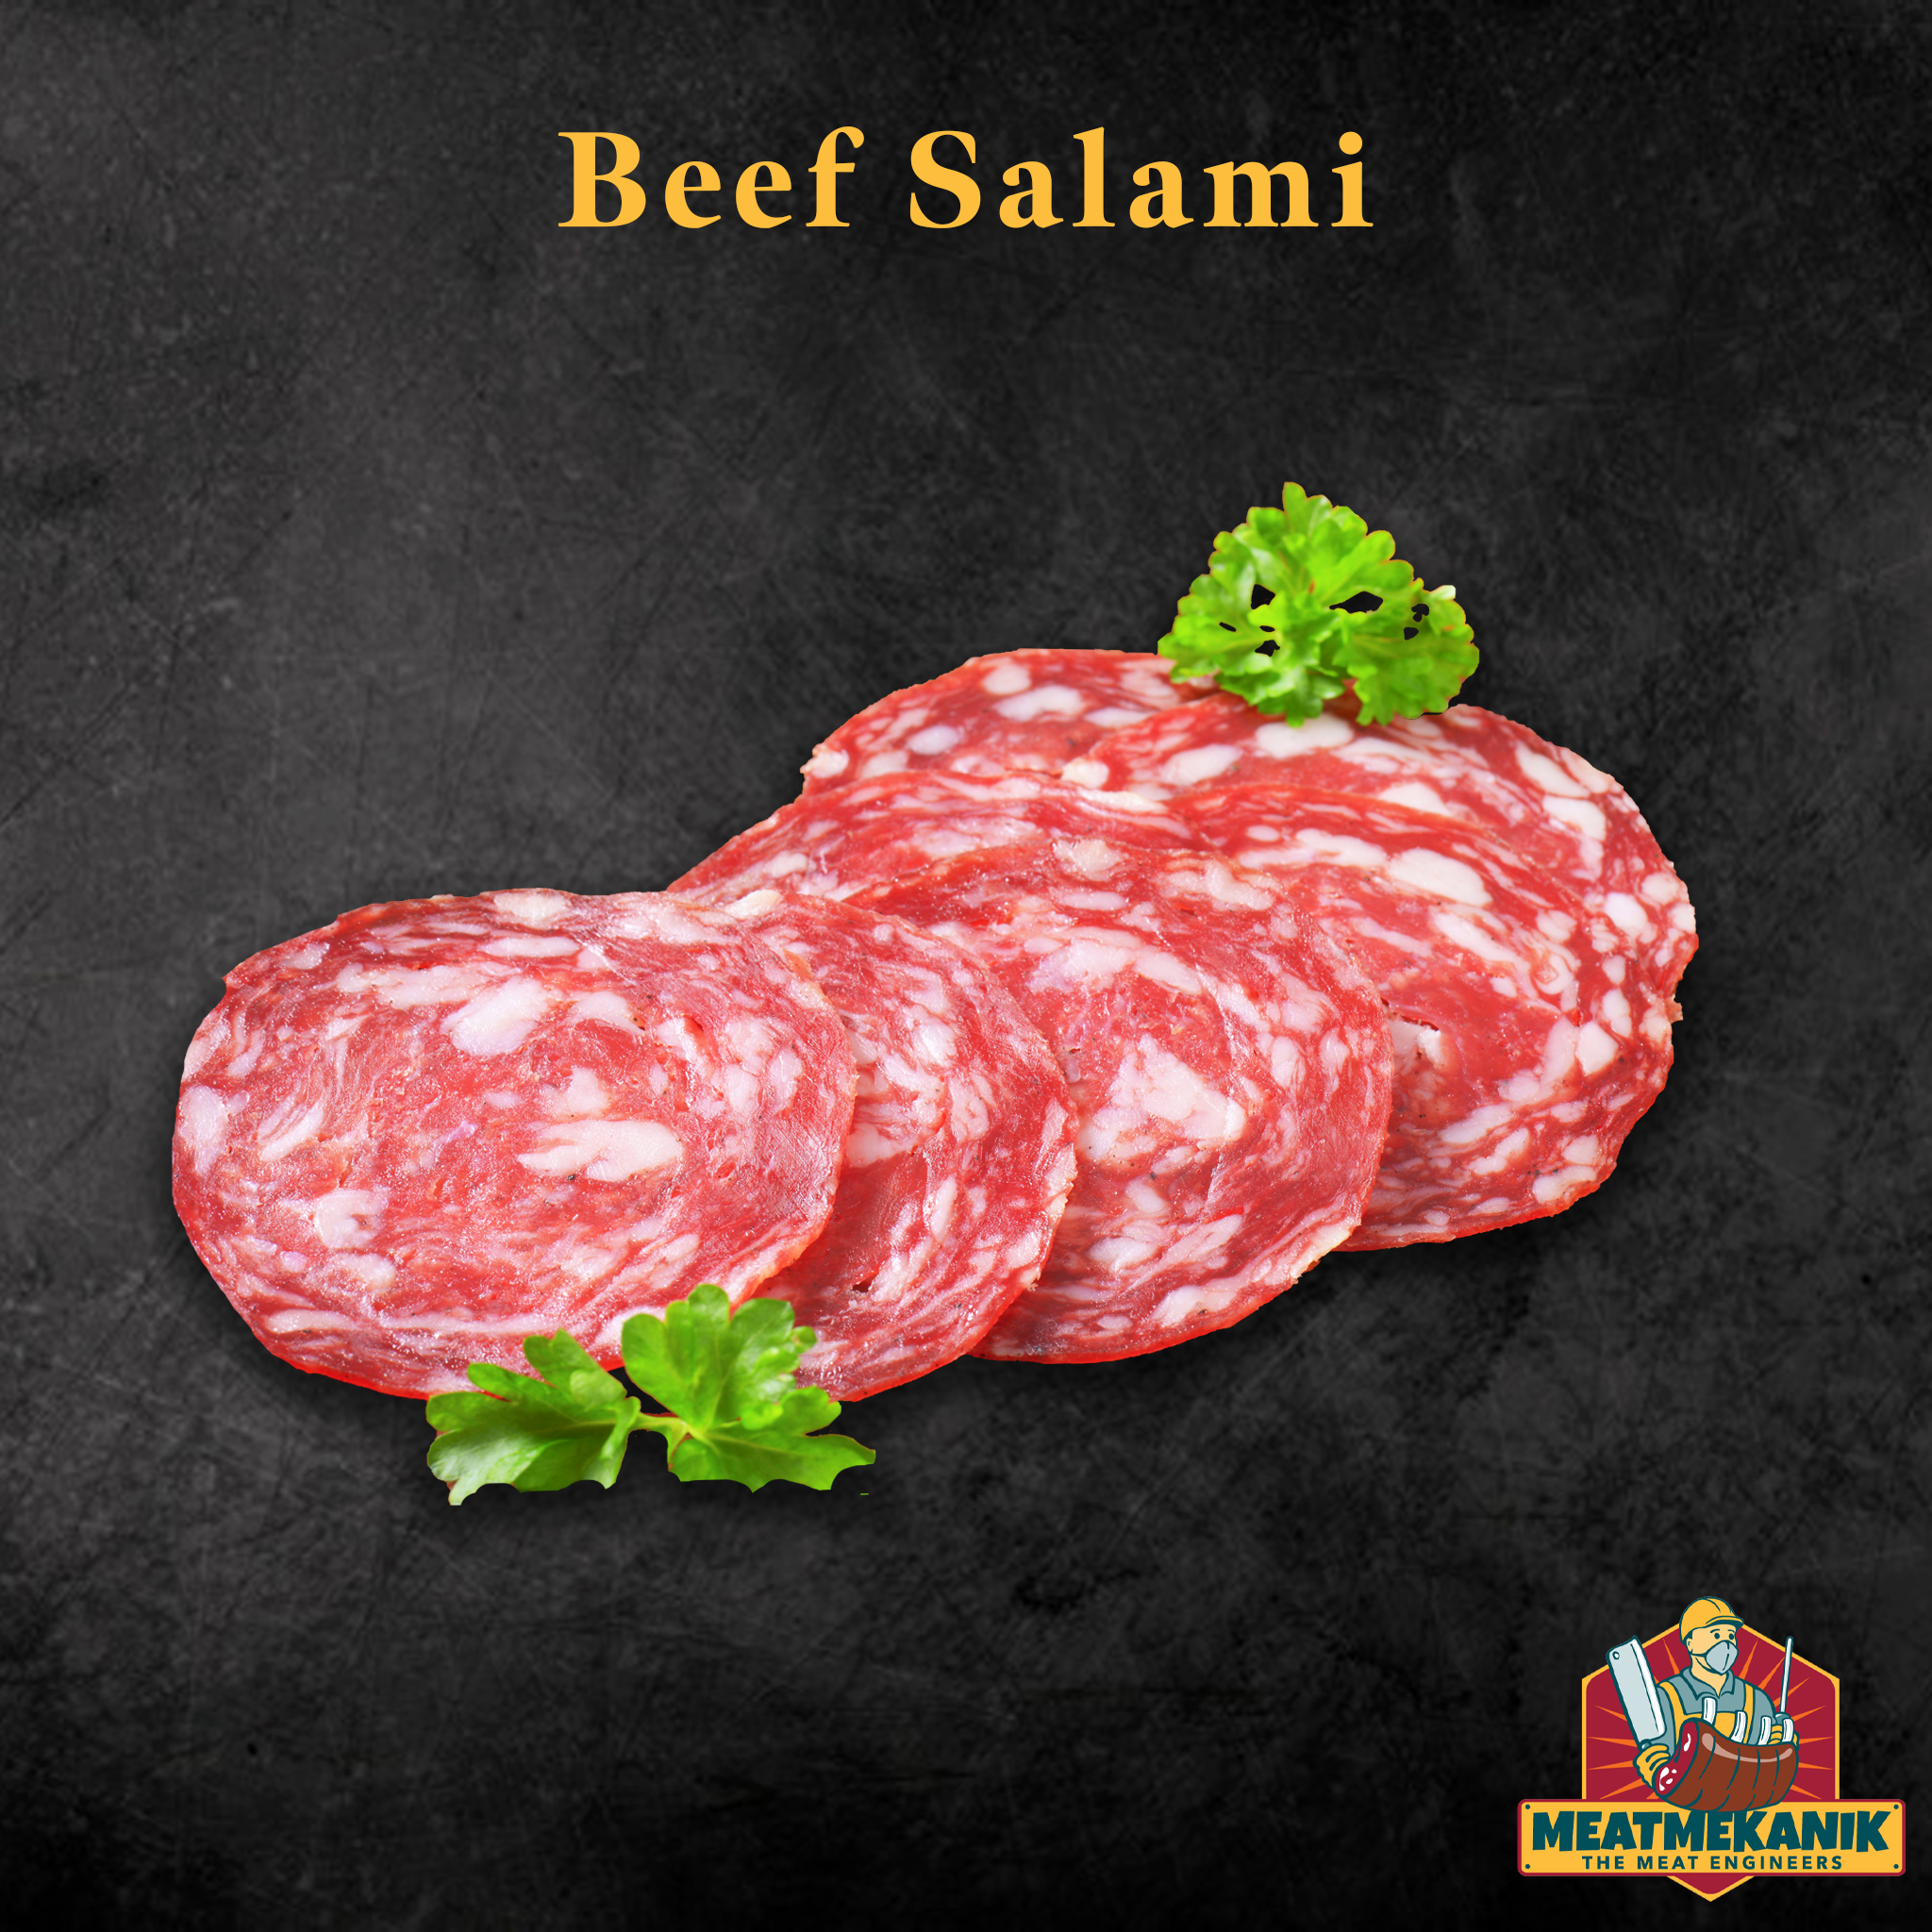 Beef Salami - Meat Mekanik